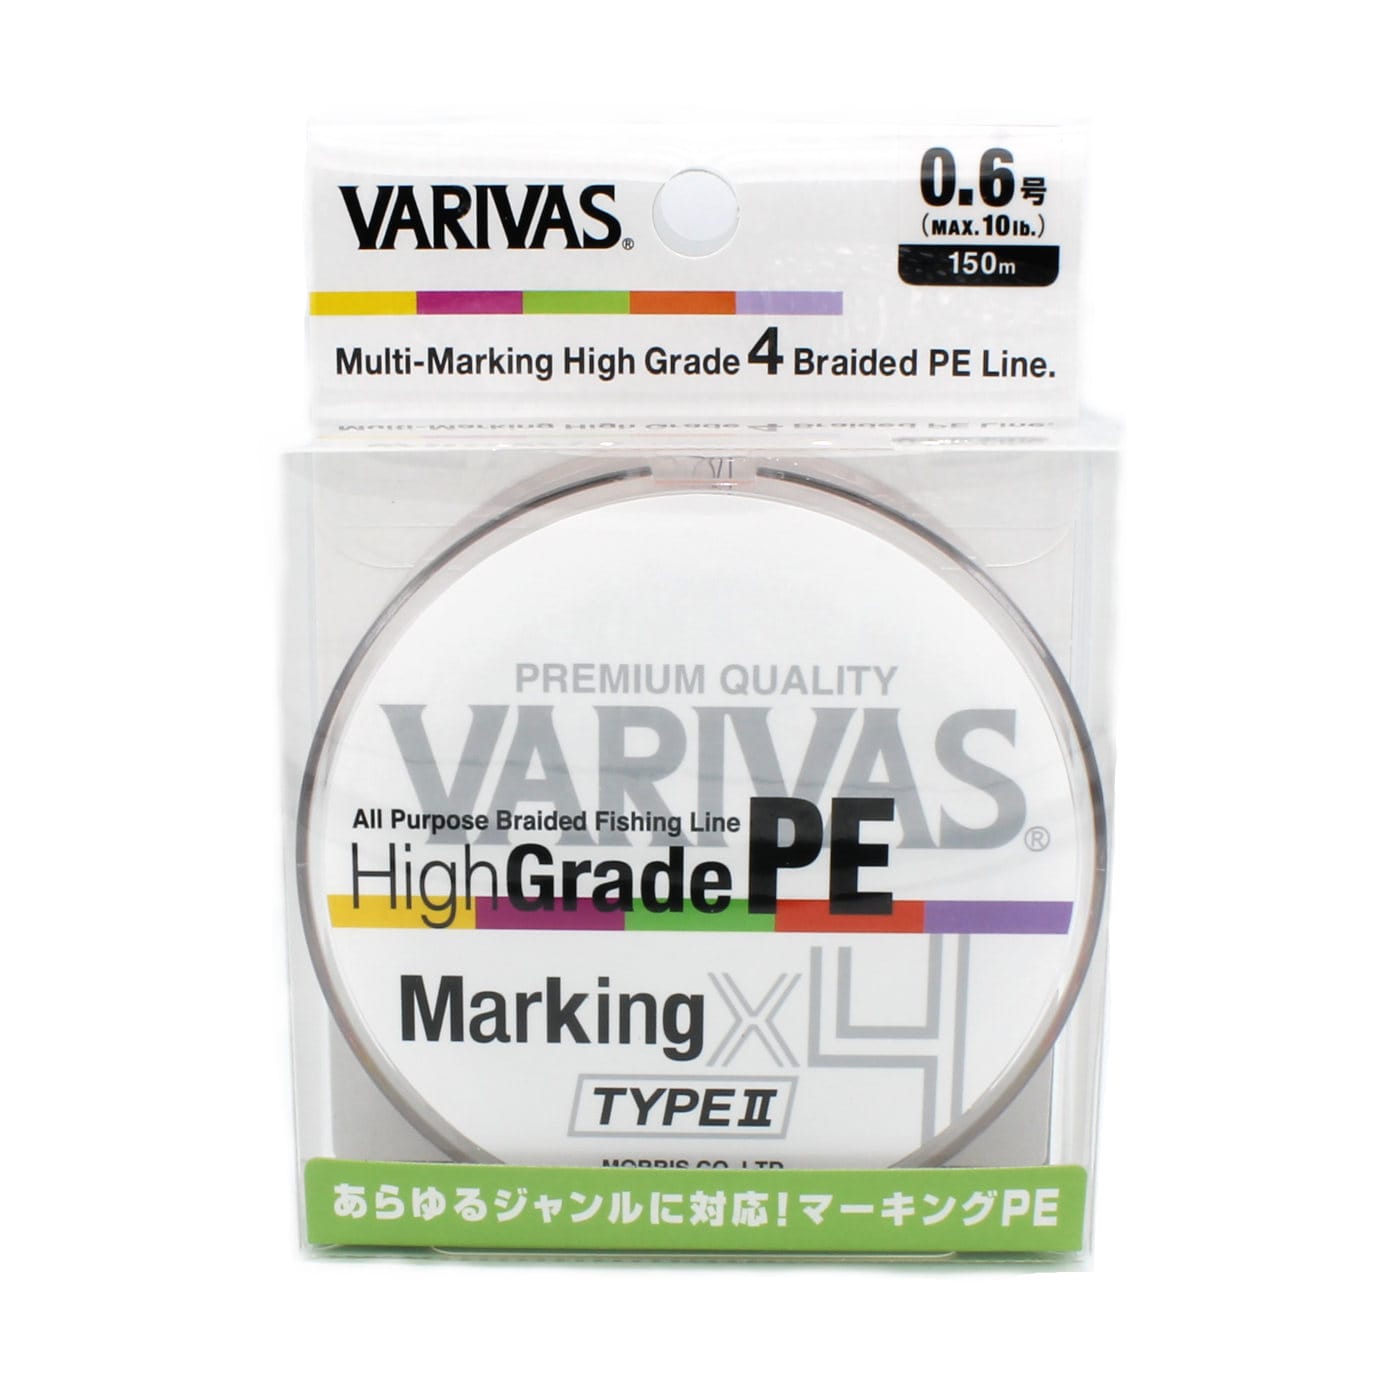 Varivas High Grade PE Marking Type II X4 Braided Line - Bait